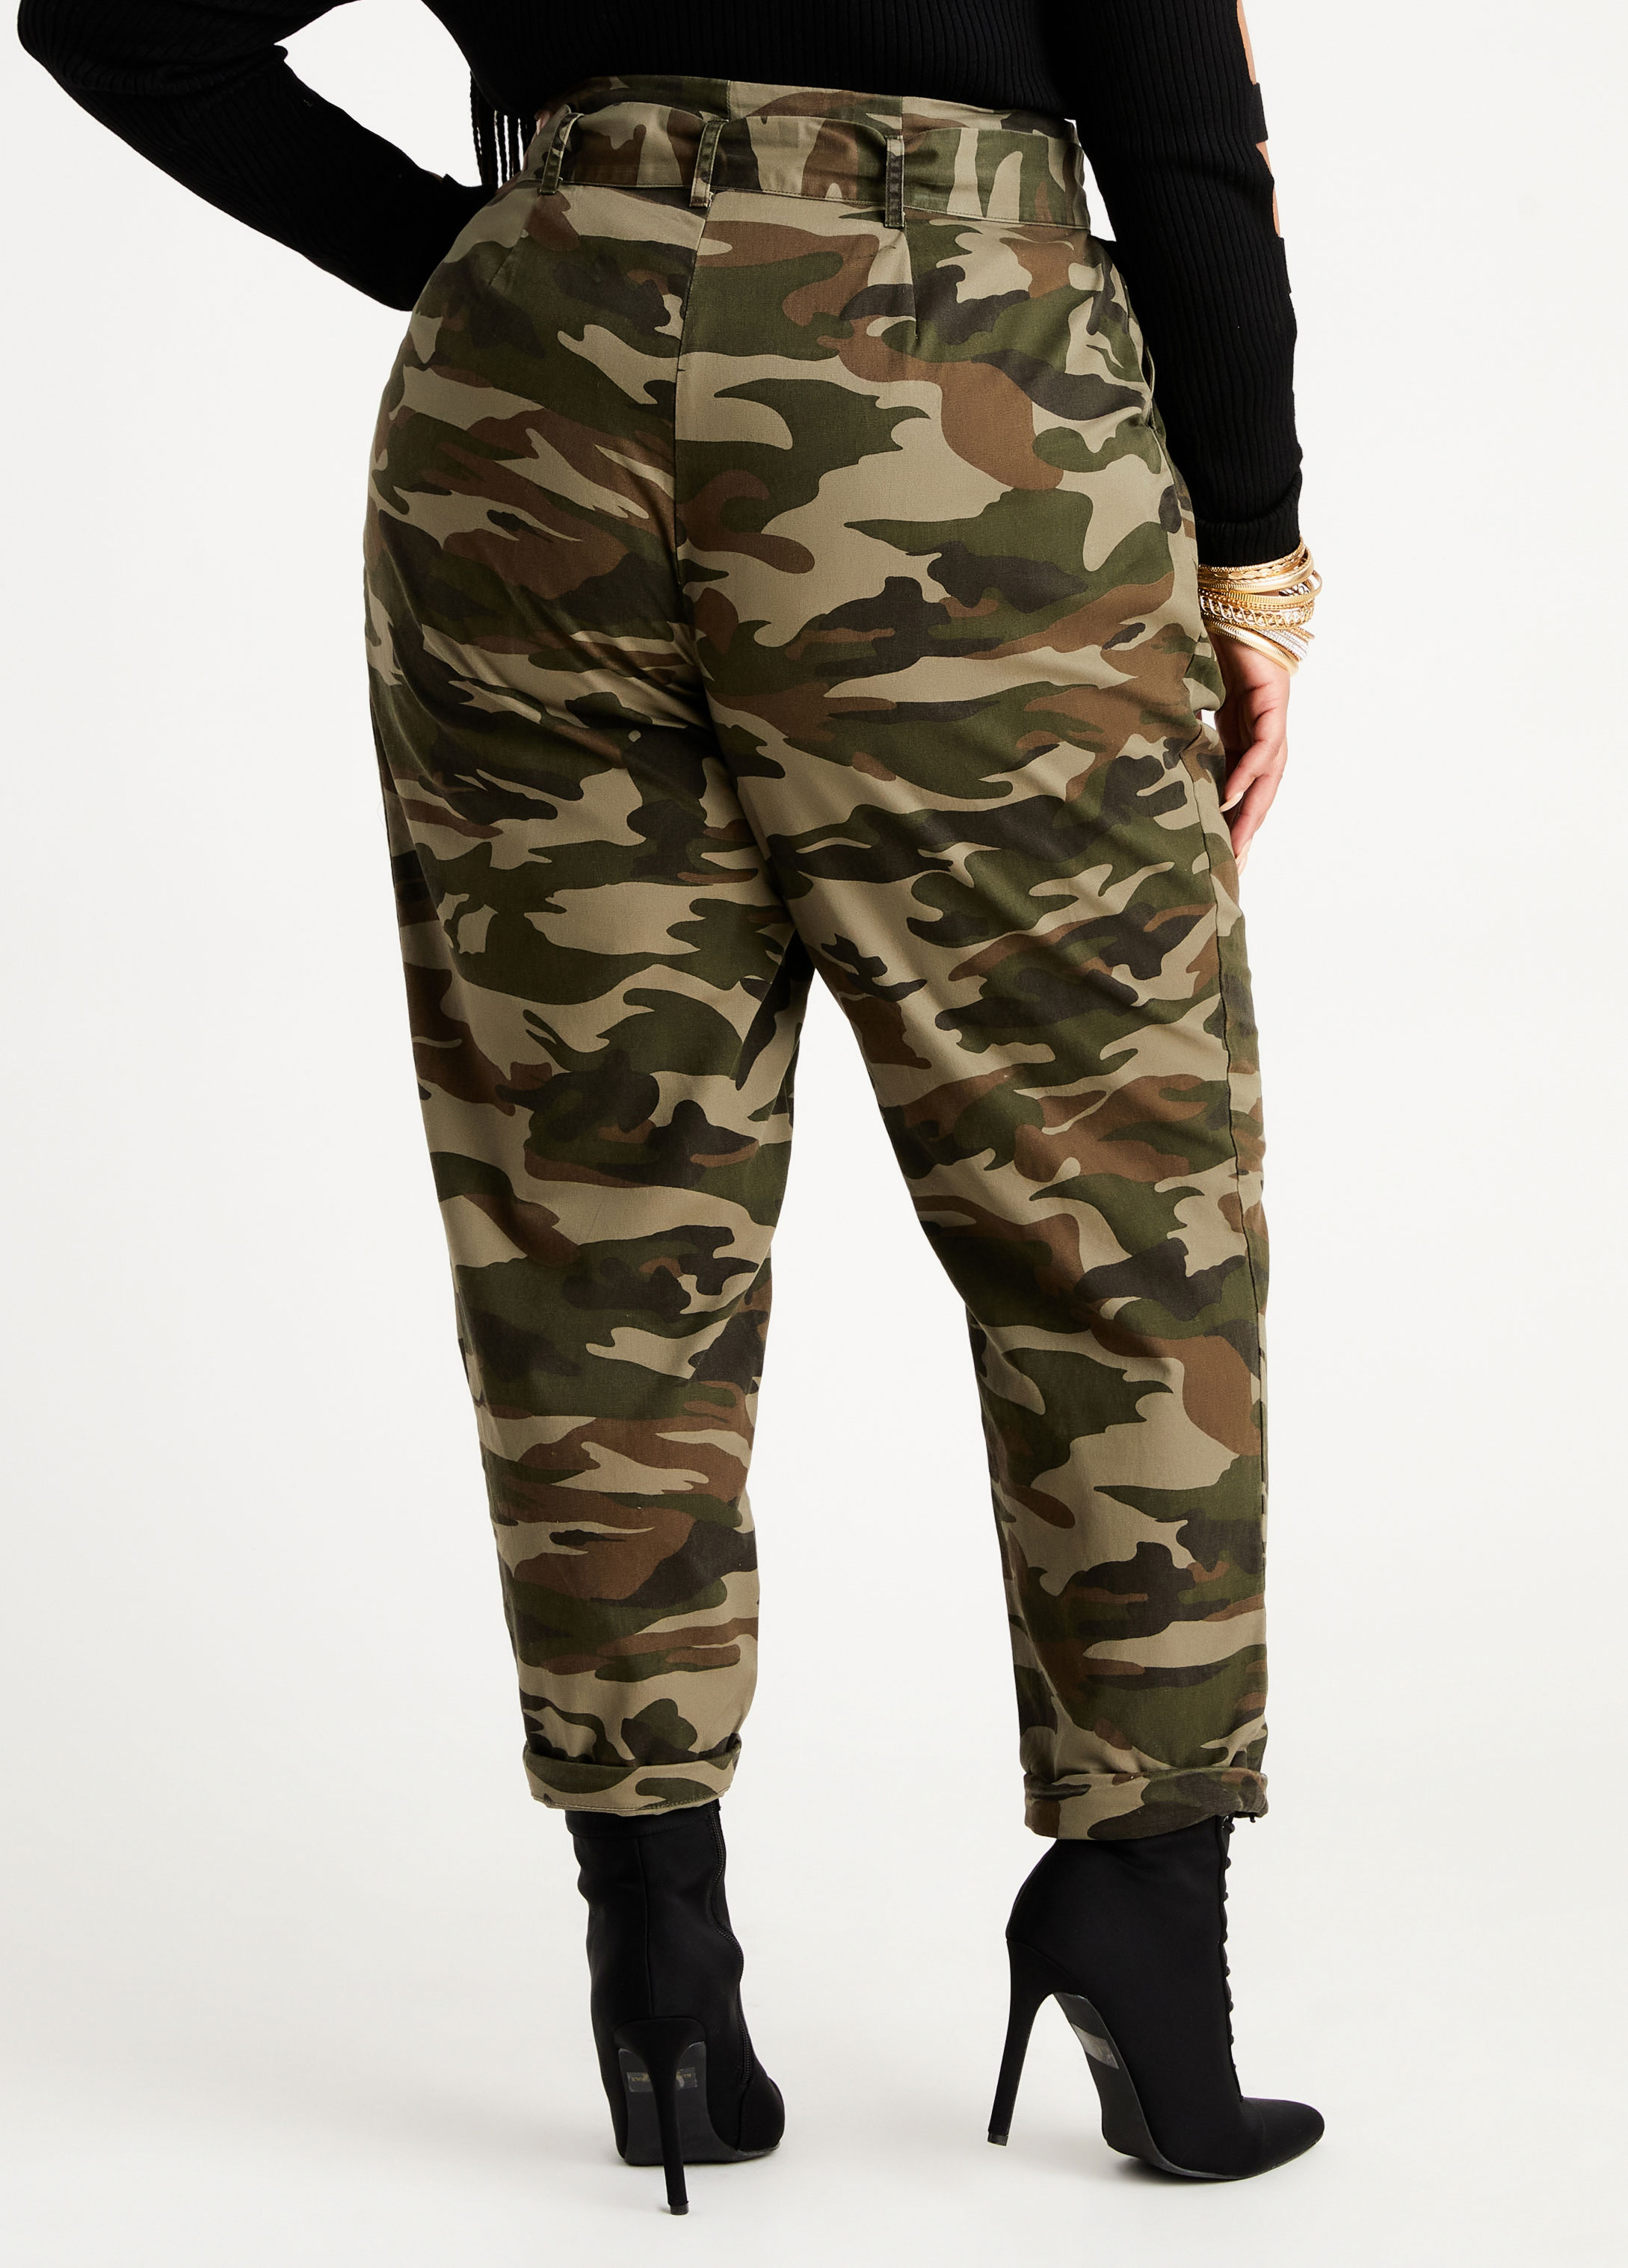 Plus Size Women's Camouflage Trend ǀ Ashley Stewart